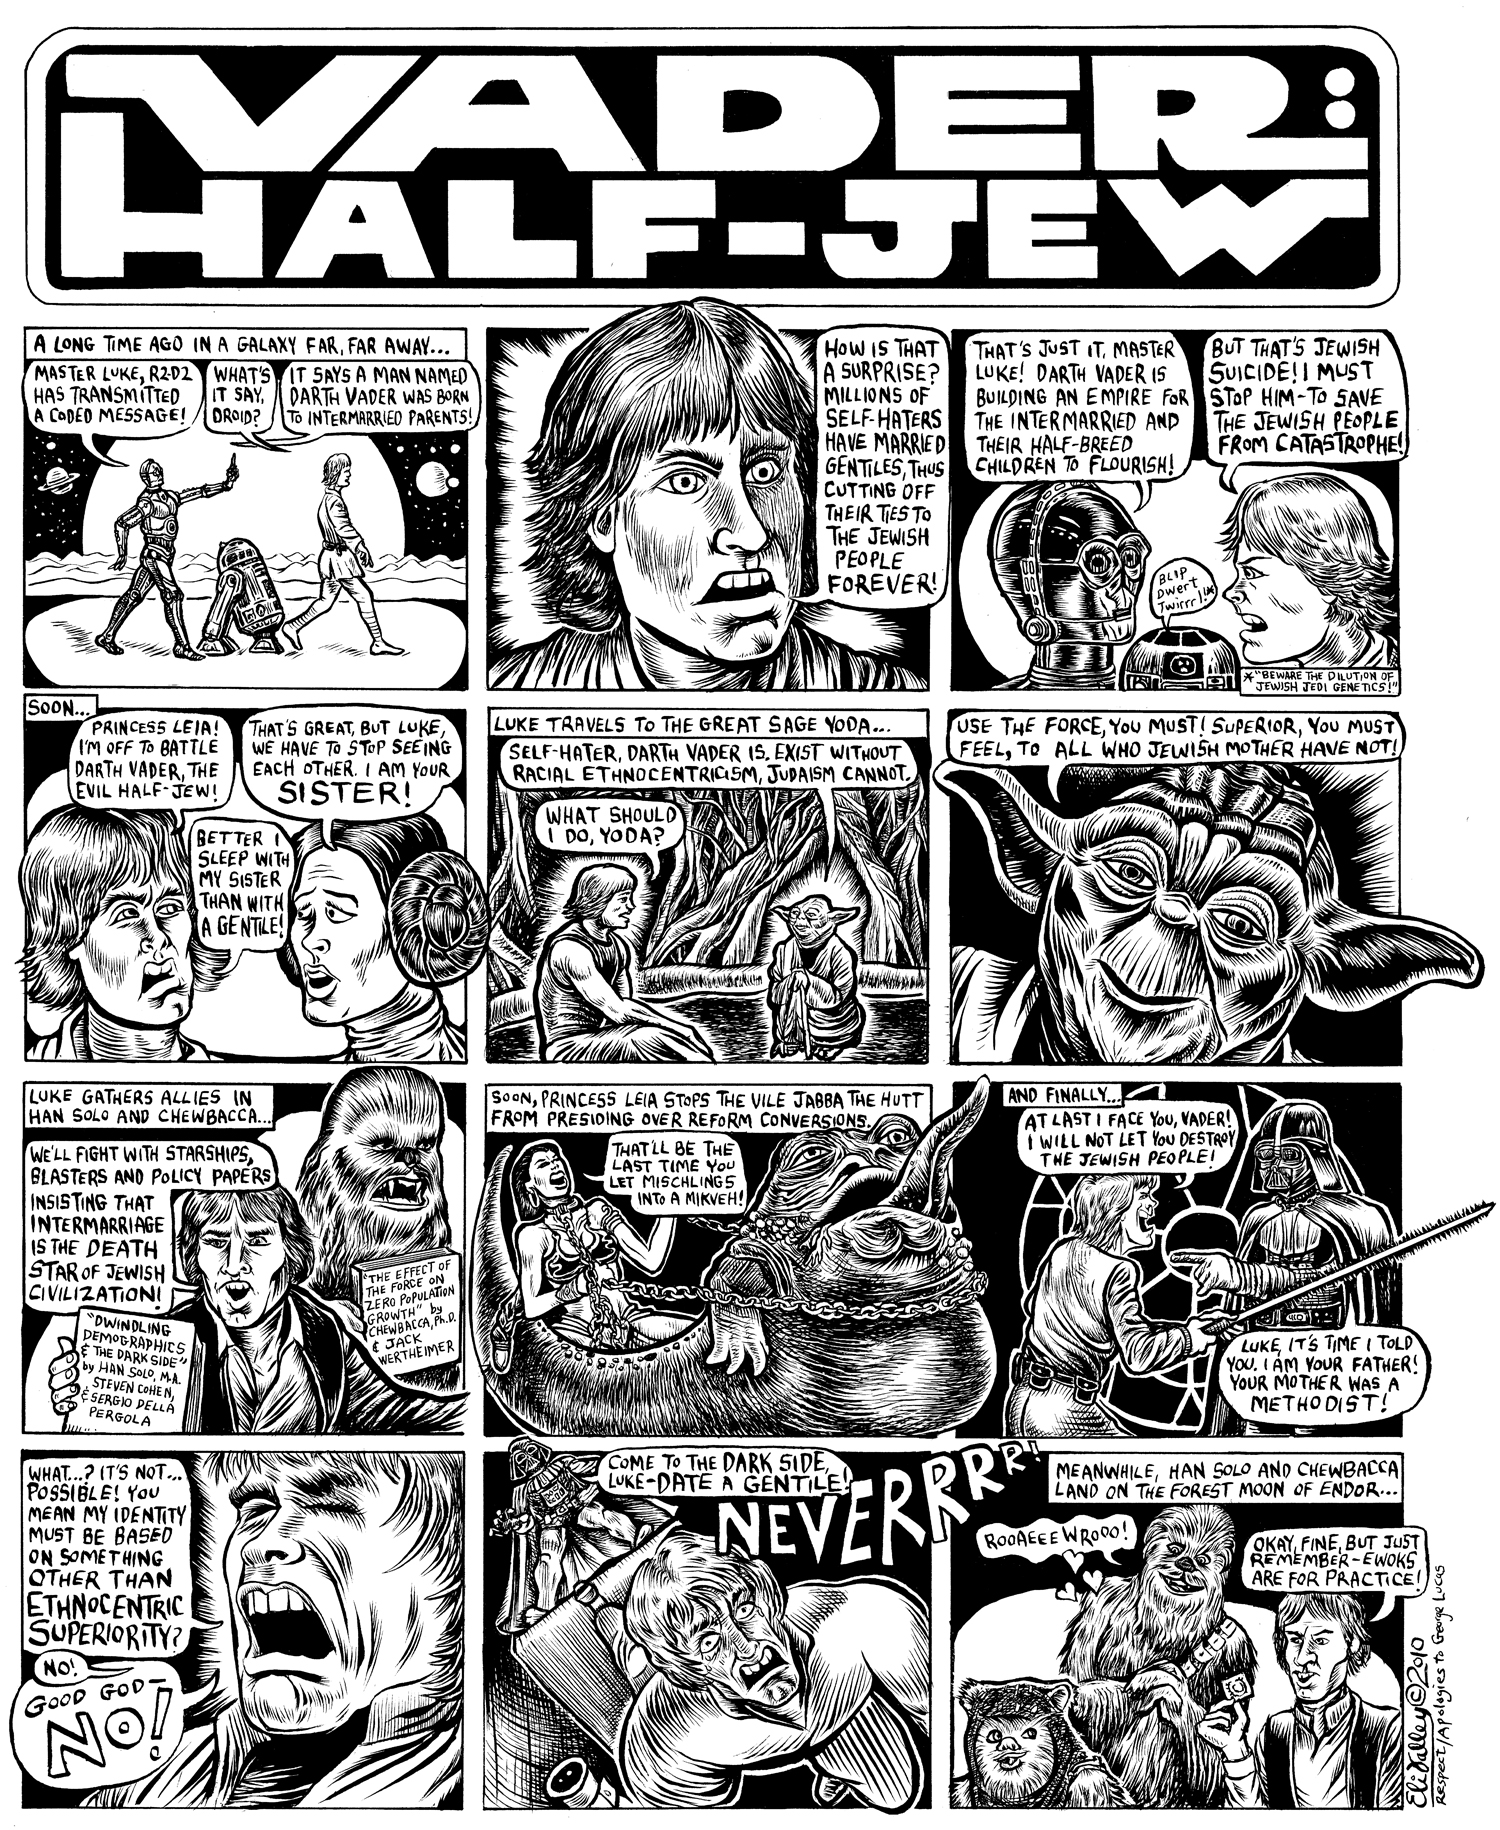 Vader: Half-Jew: Intermarriage. Forward, 3/25/10